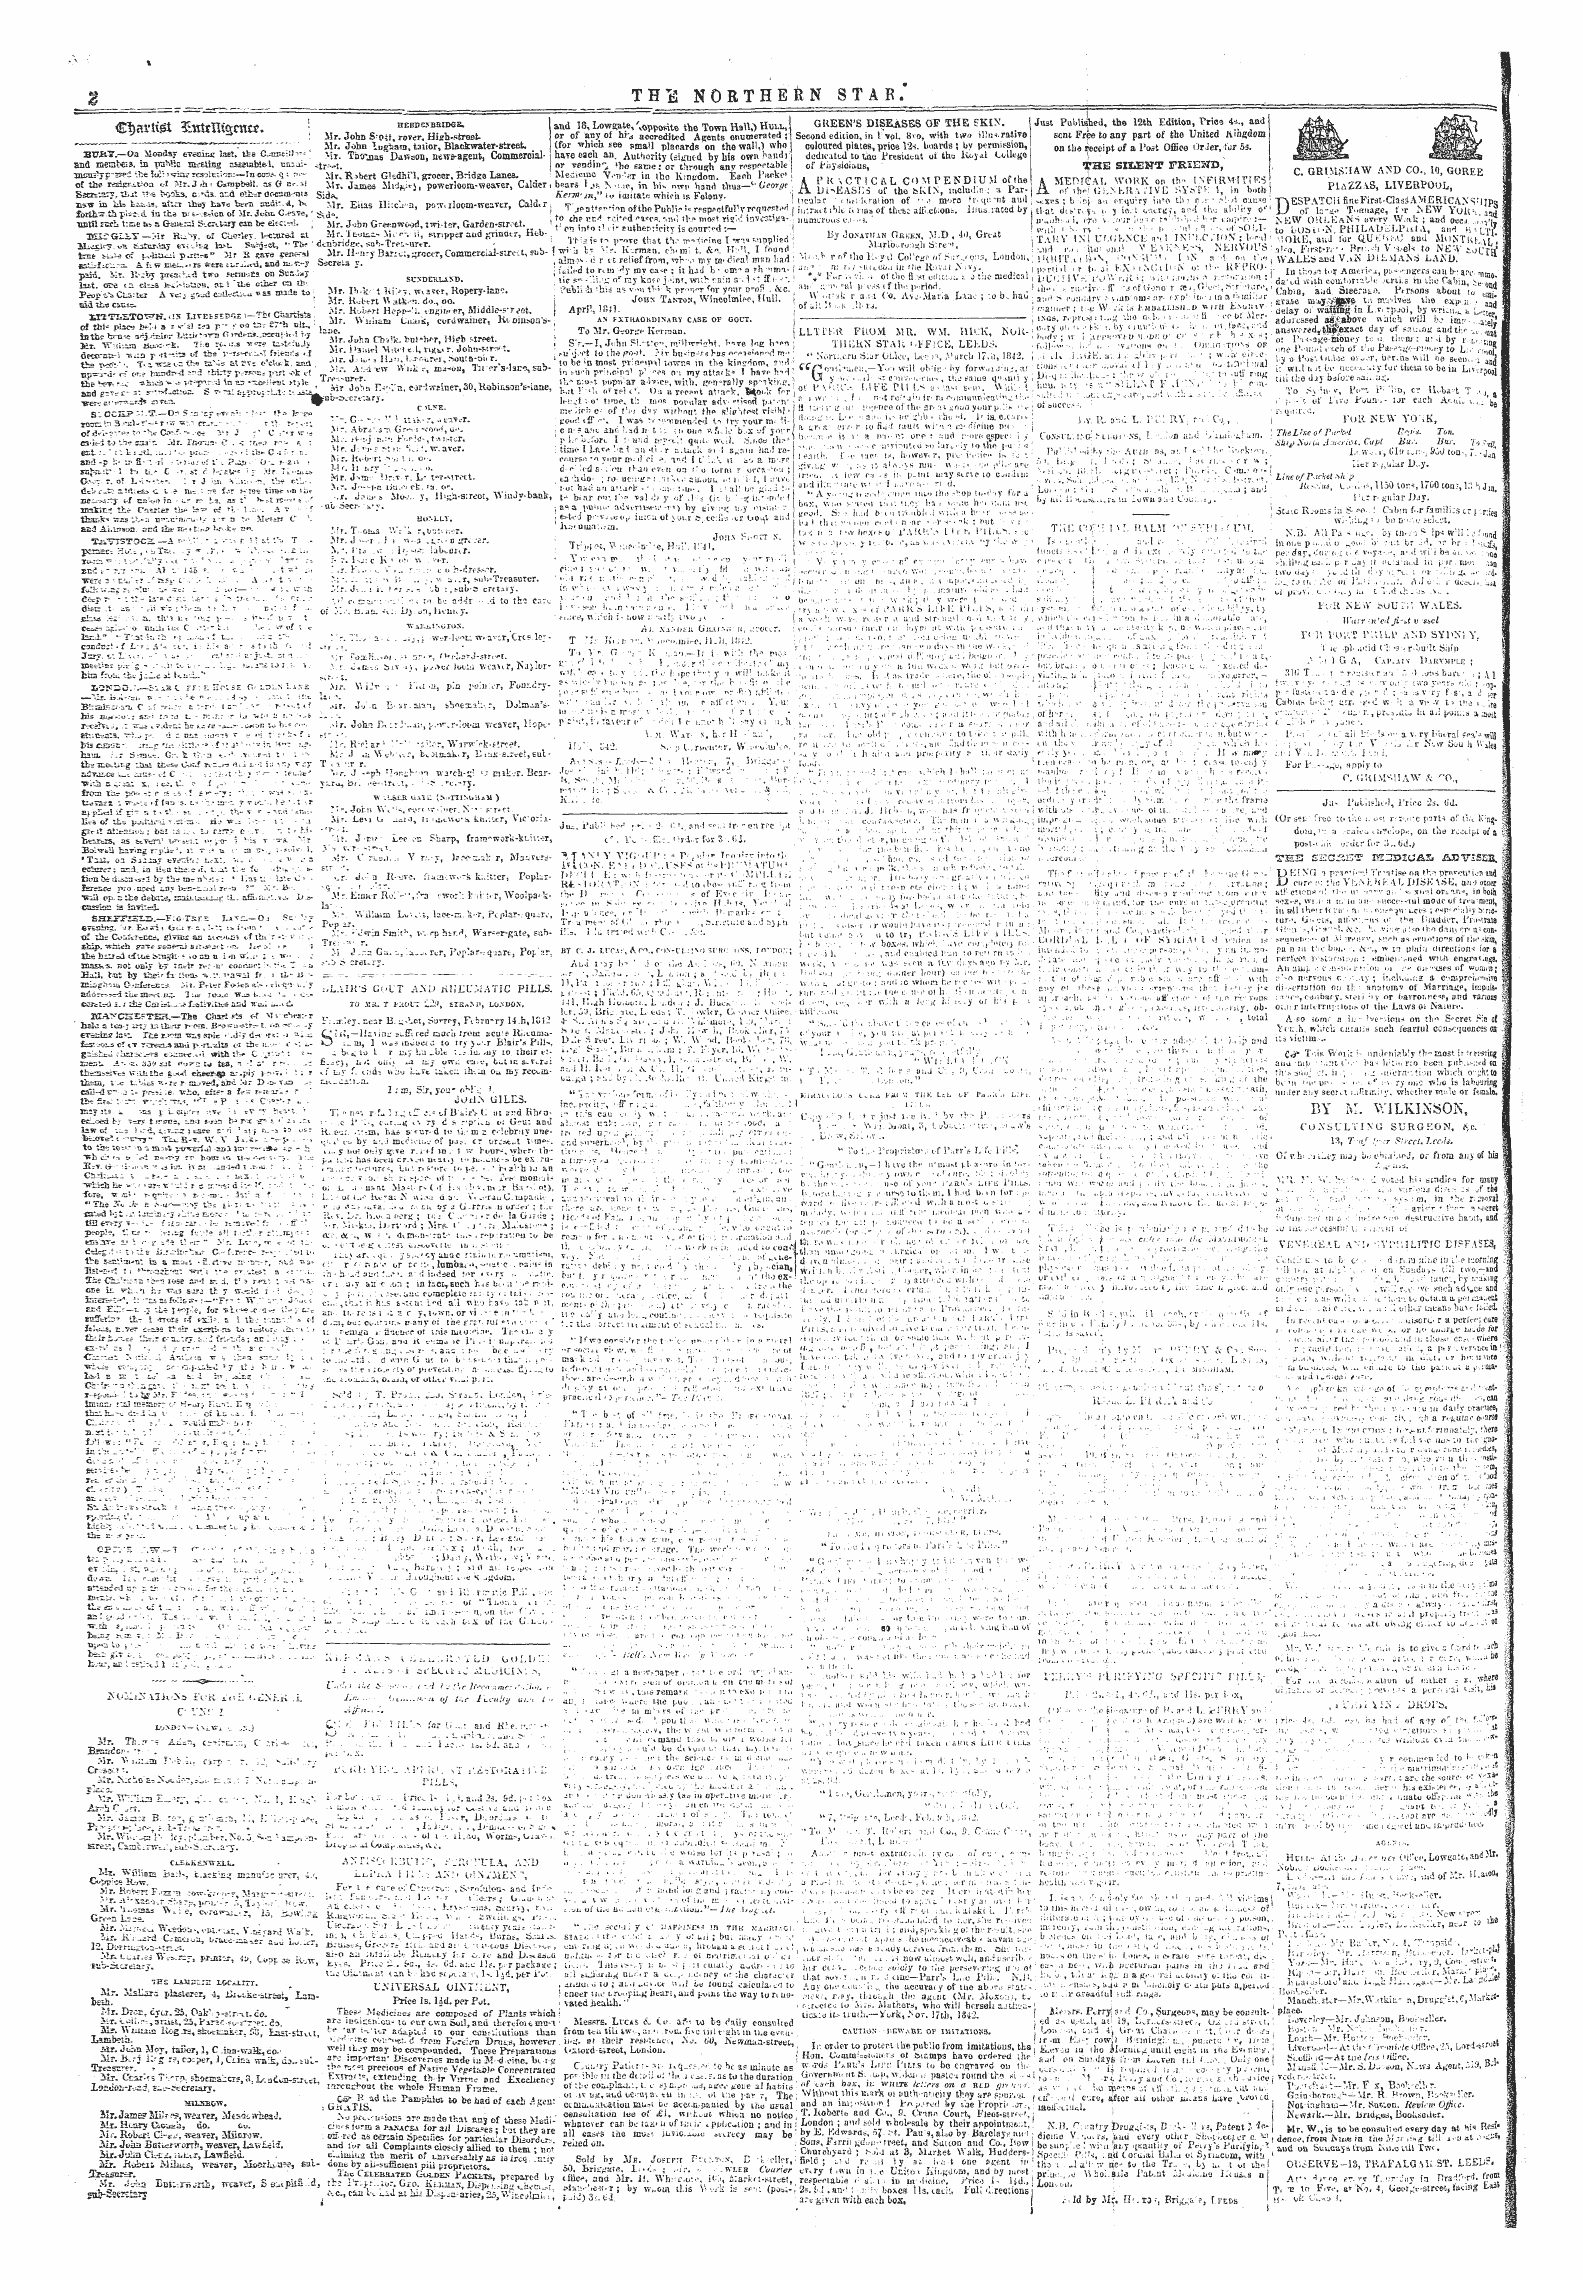 Northern Star (1837-1852): jS F Y, 5th edition - Ad00211